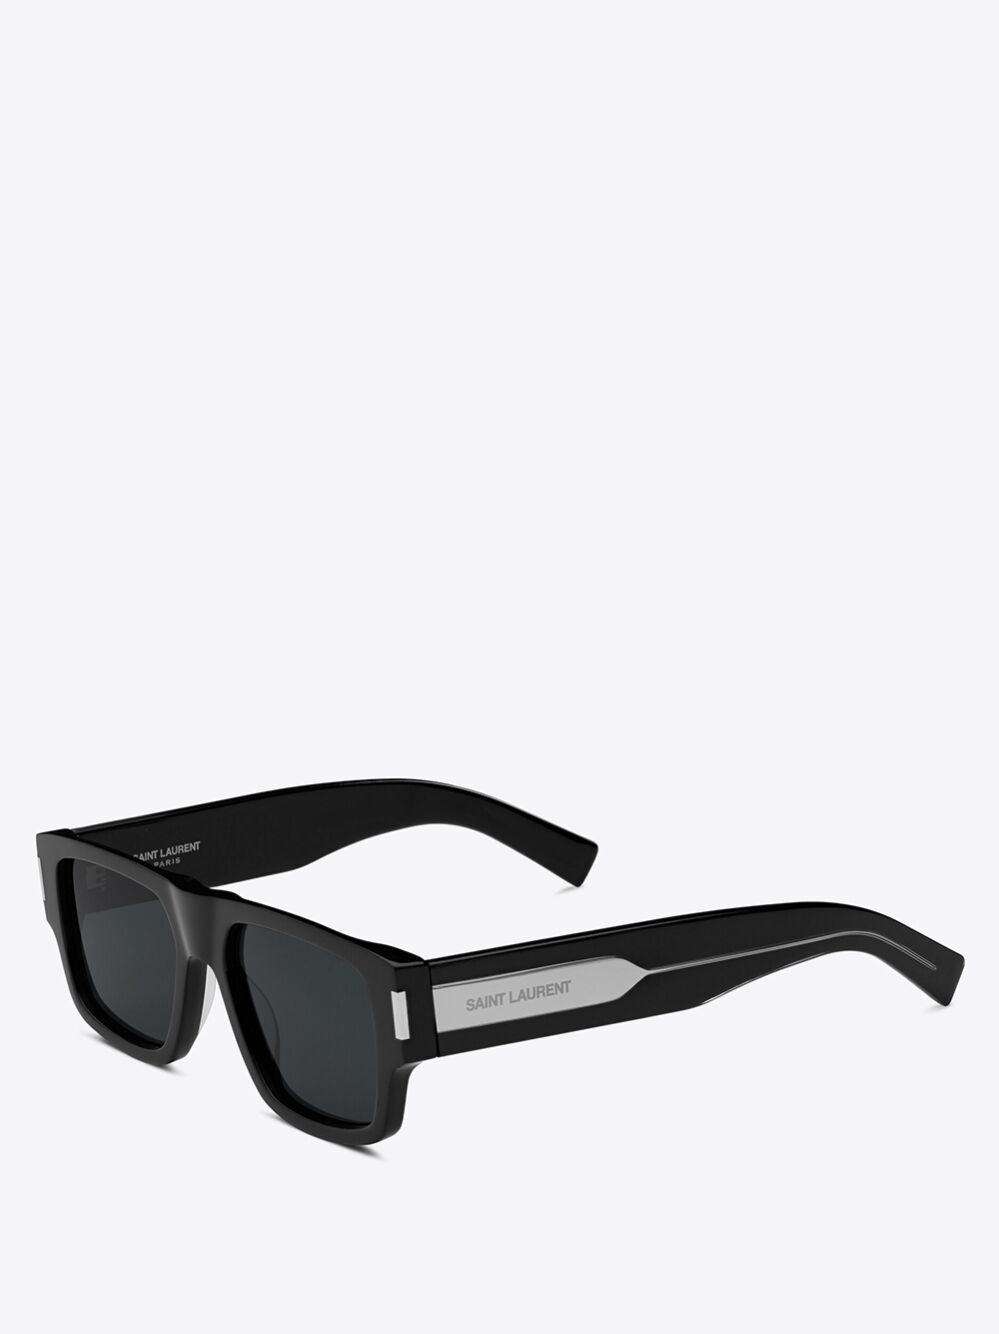 Sl 659 sunglasses - 2